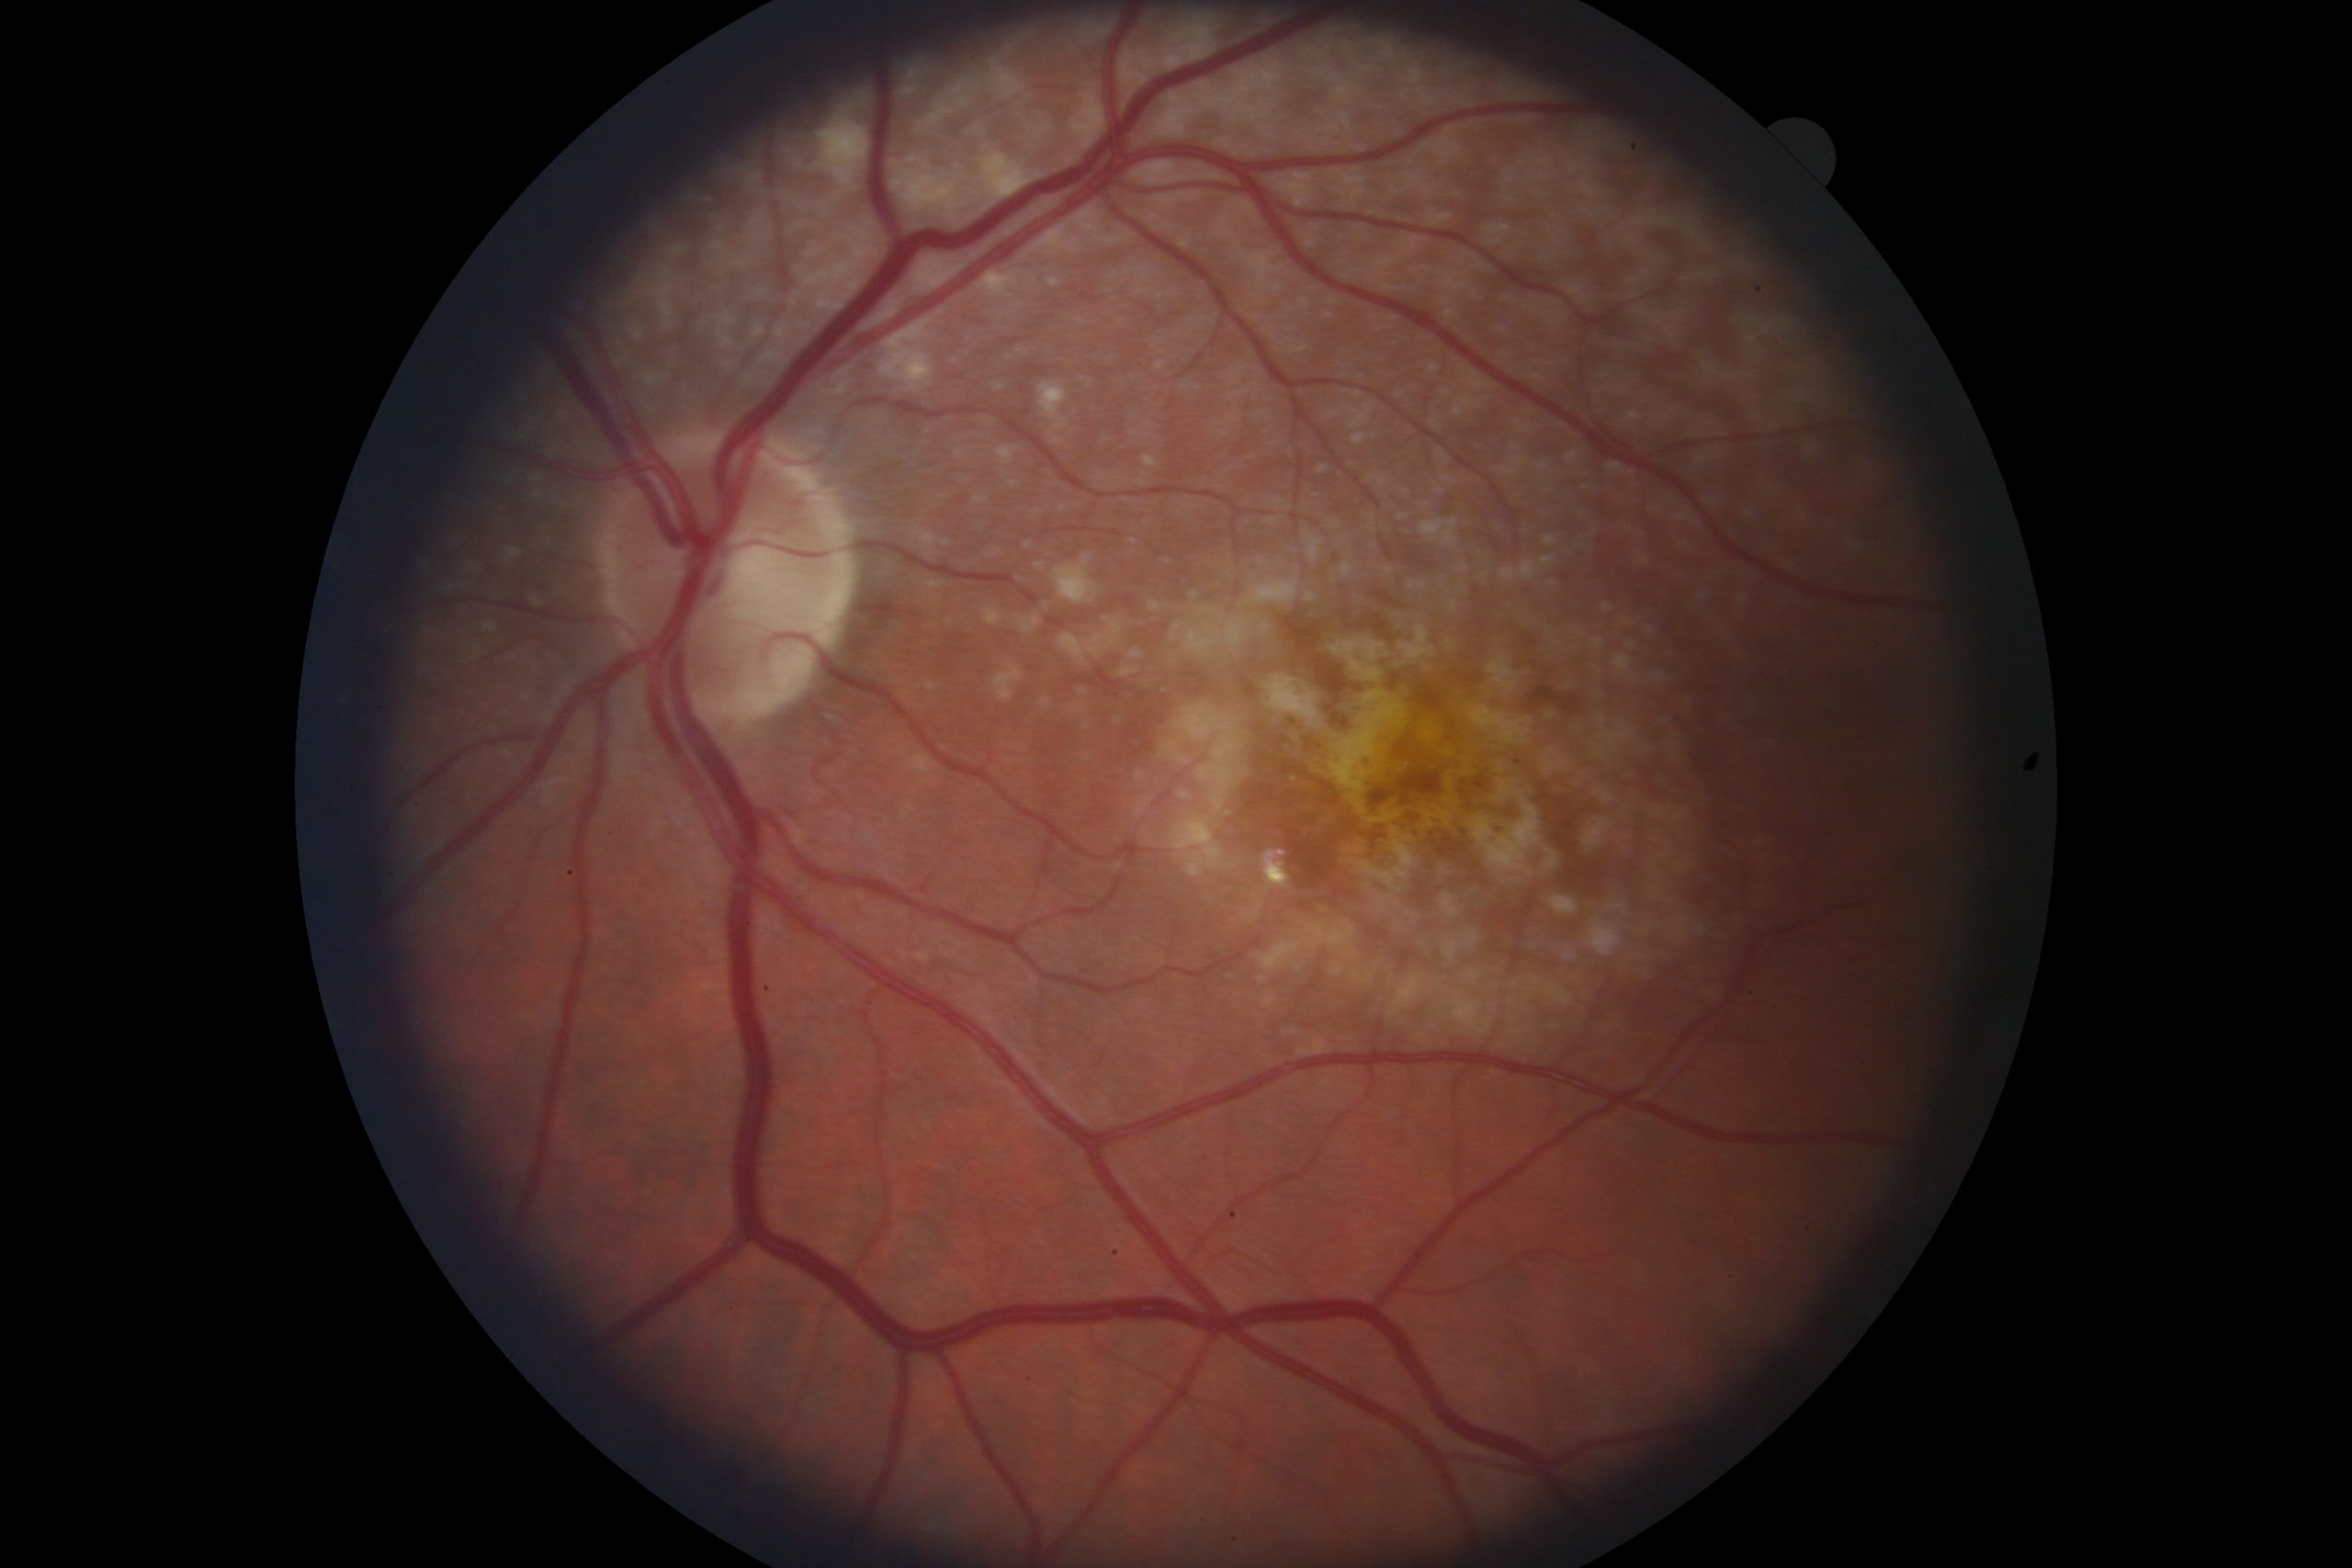 retinal scan of dry macular degeneration